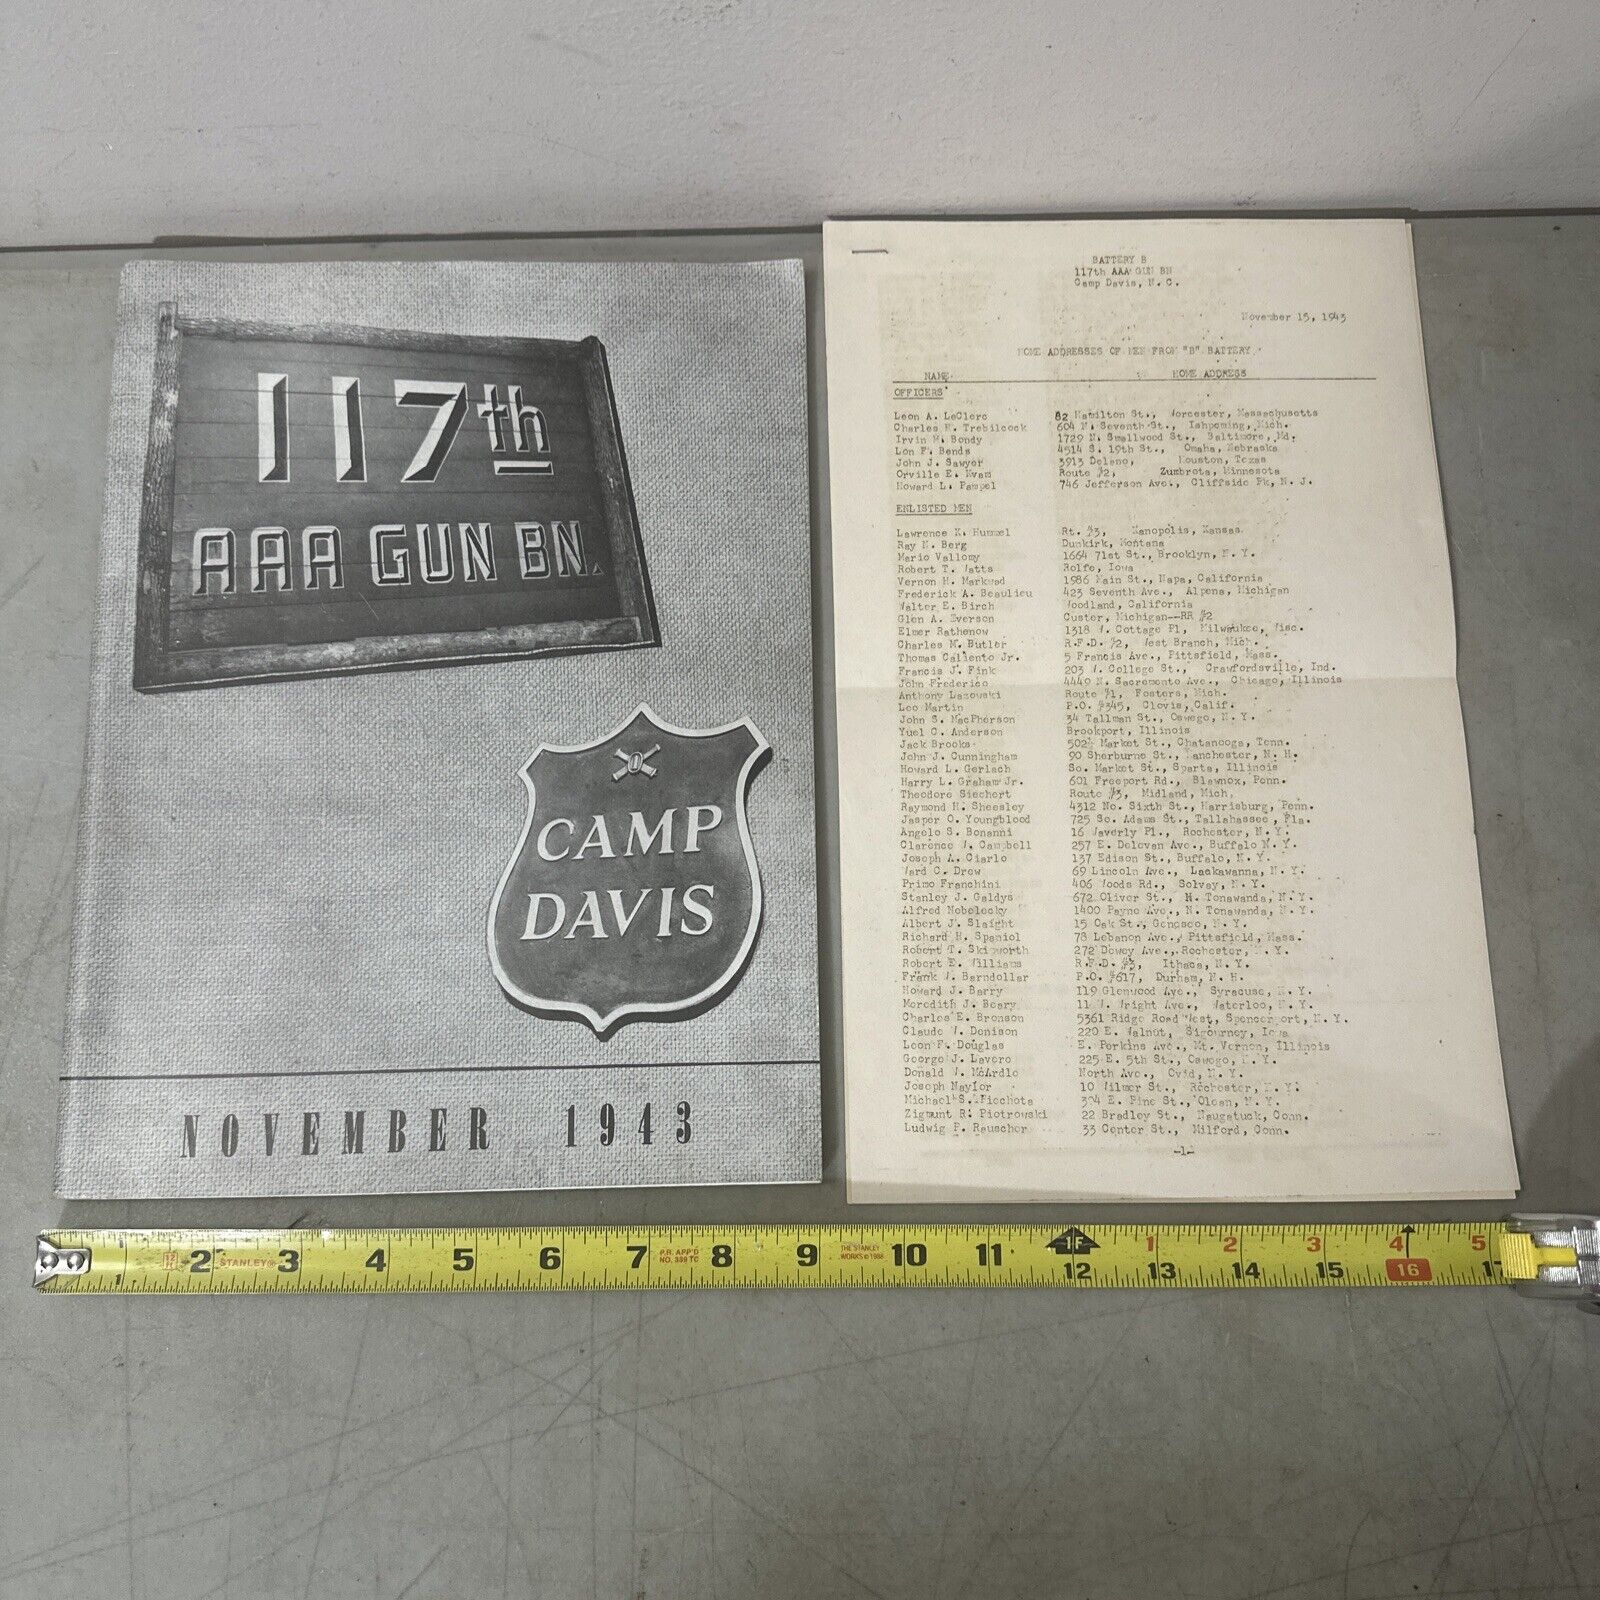 November 1943 Camp Davis 117th Anti-Aircraft Artillery Gun Batallion Yearbook NC